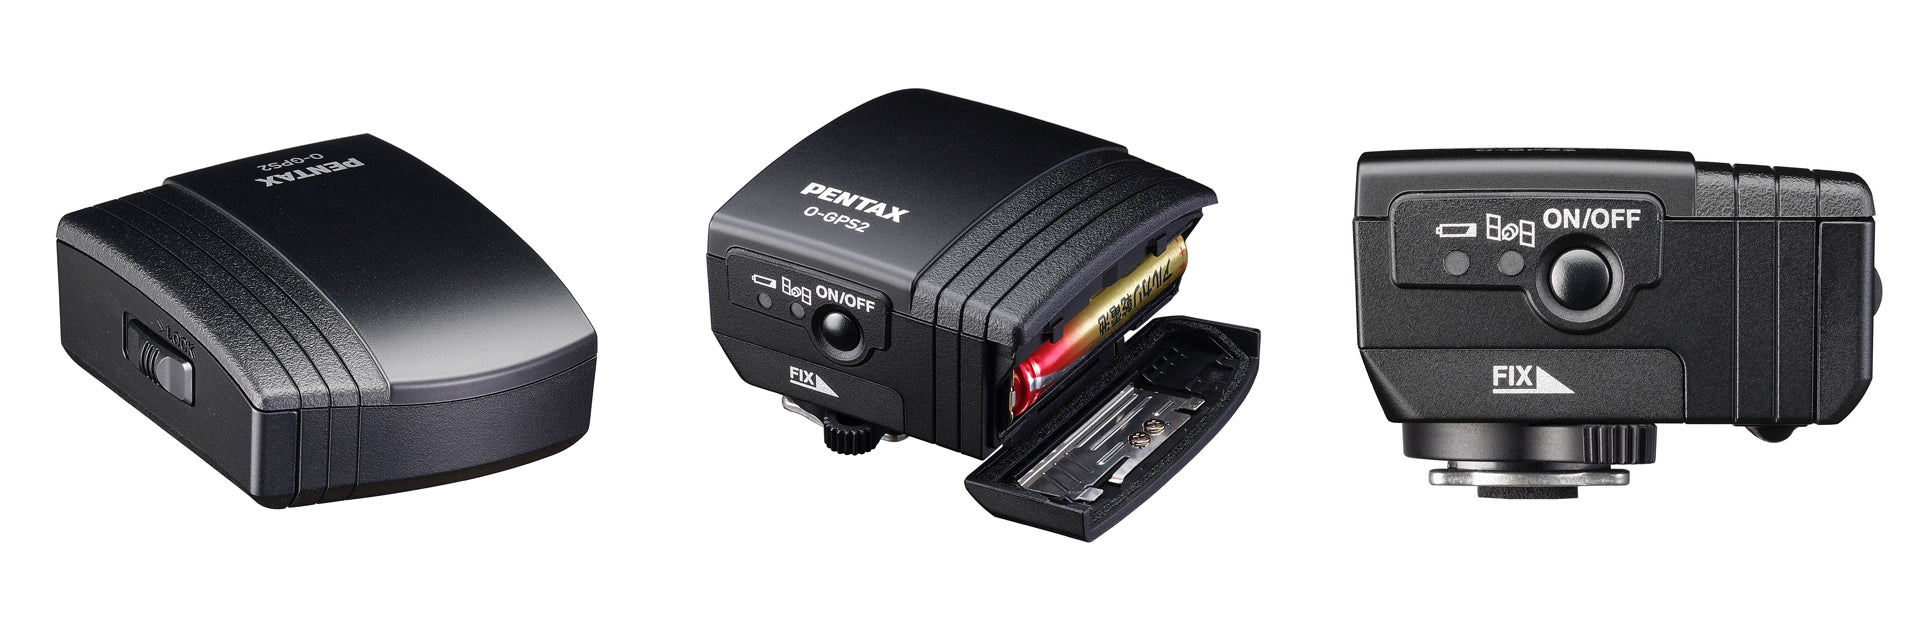 PENTAX O-GPS2 - GPS Unit for PENTAX cameras – PENTAX - Official Store